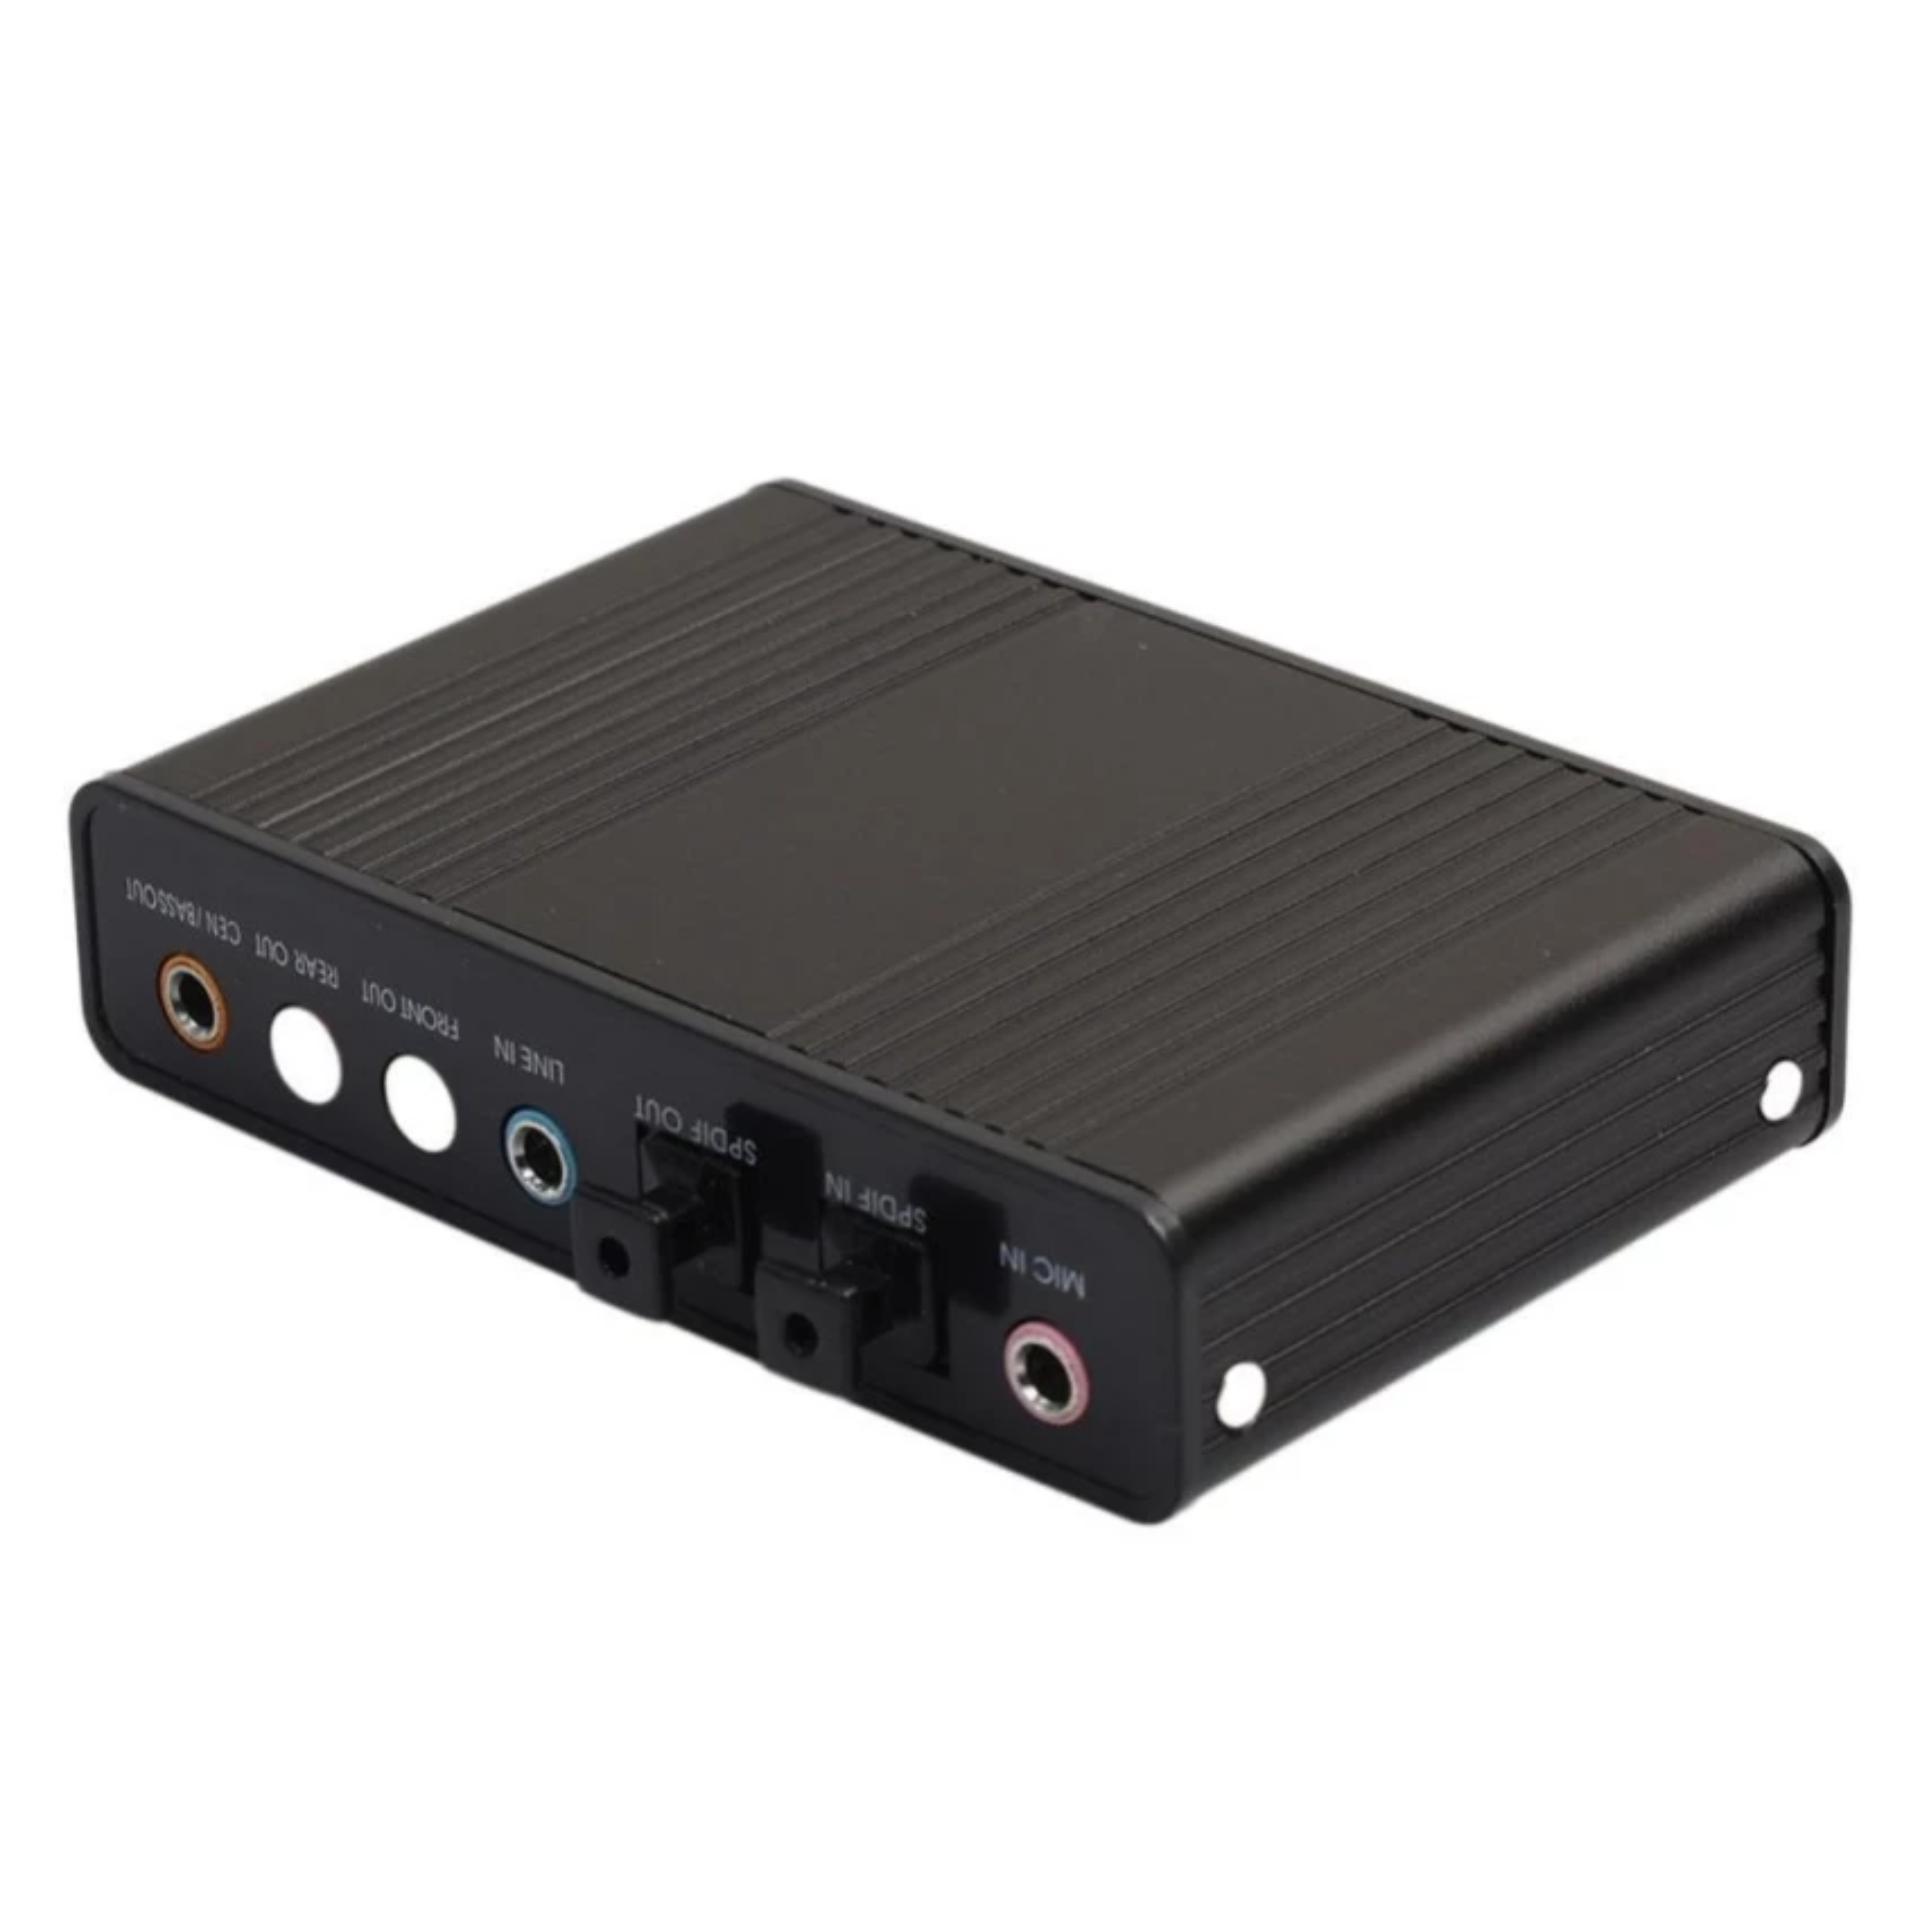 Card âm thanh box 5.1 USB 6CH + Optical audio (Đen)